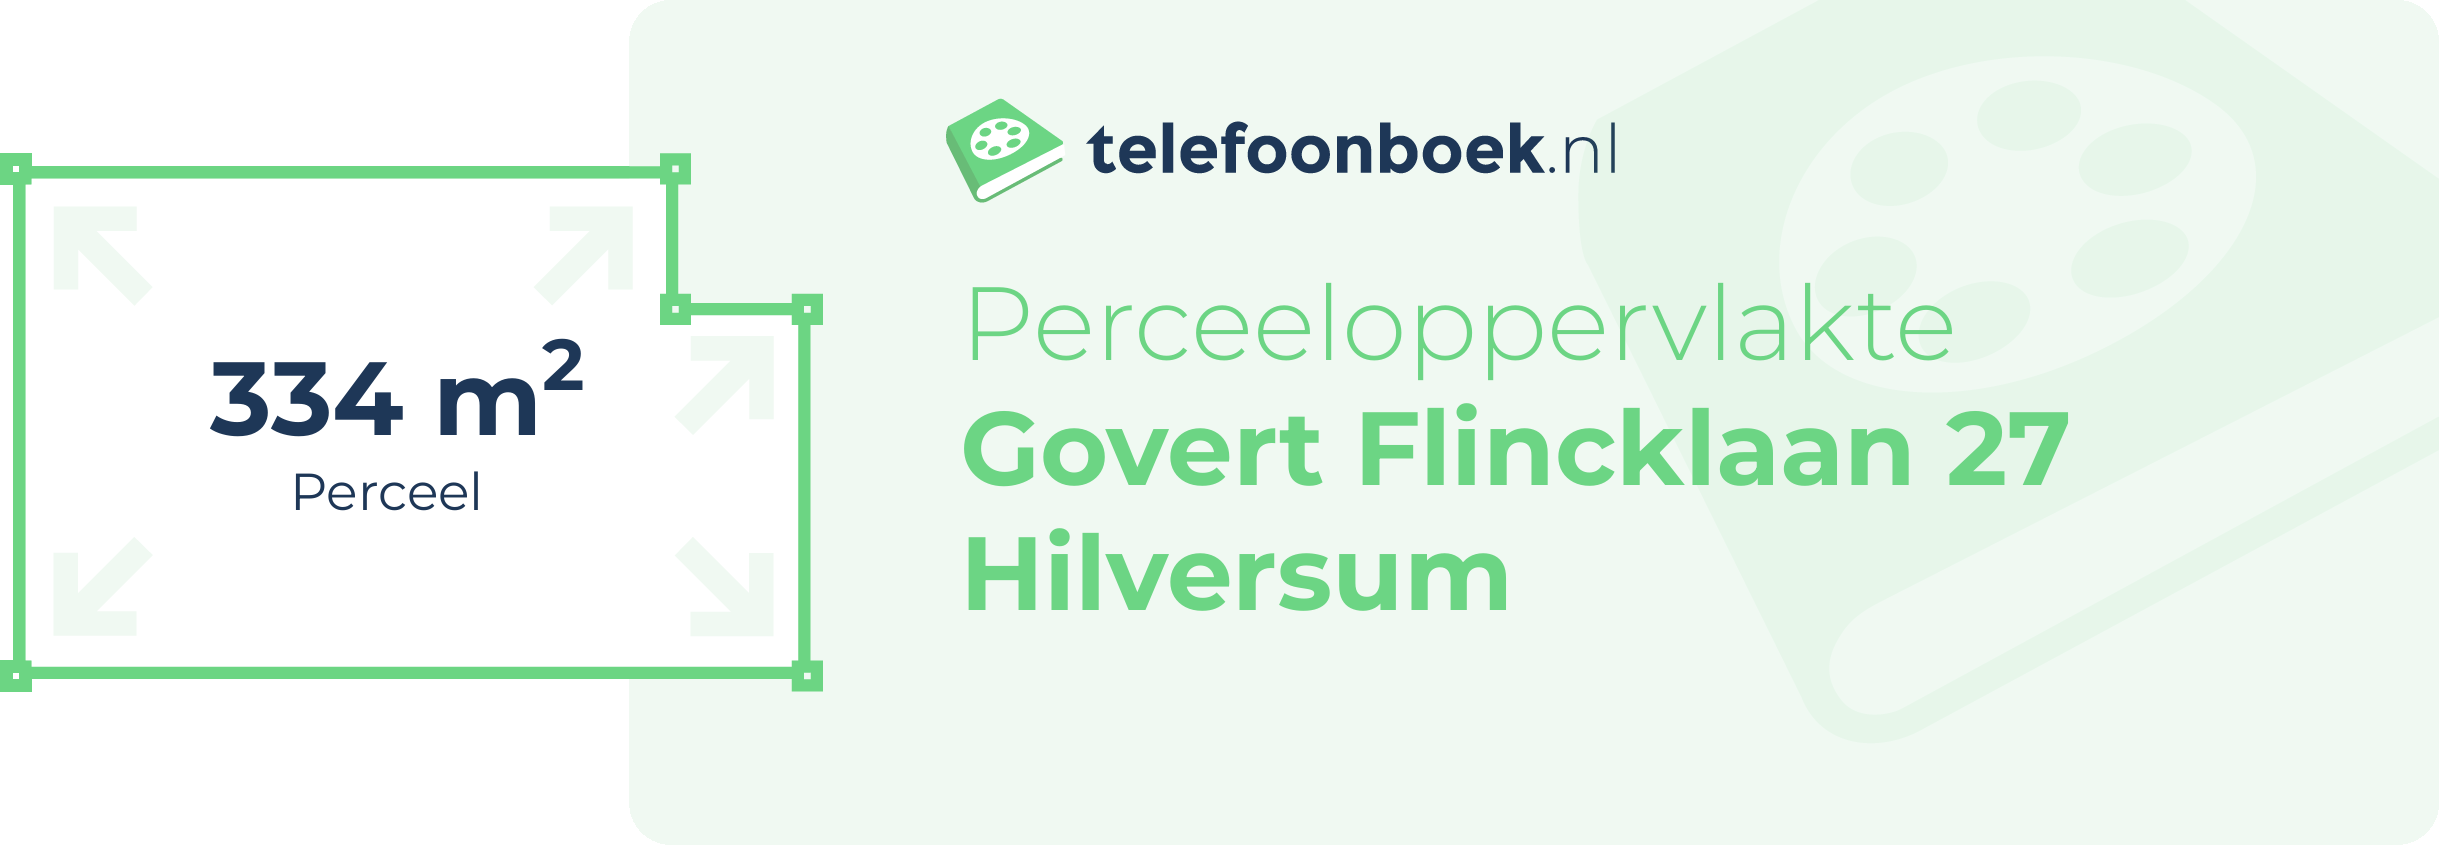 Perceeloppervlakte Govert Flincklaan 27 Hilversum